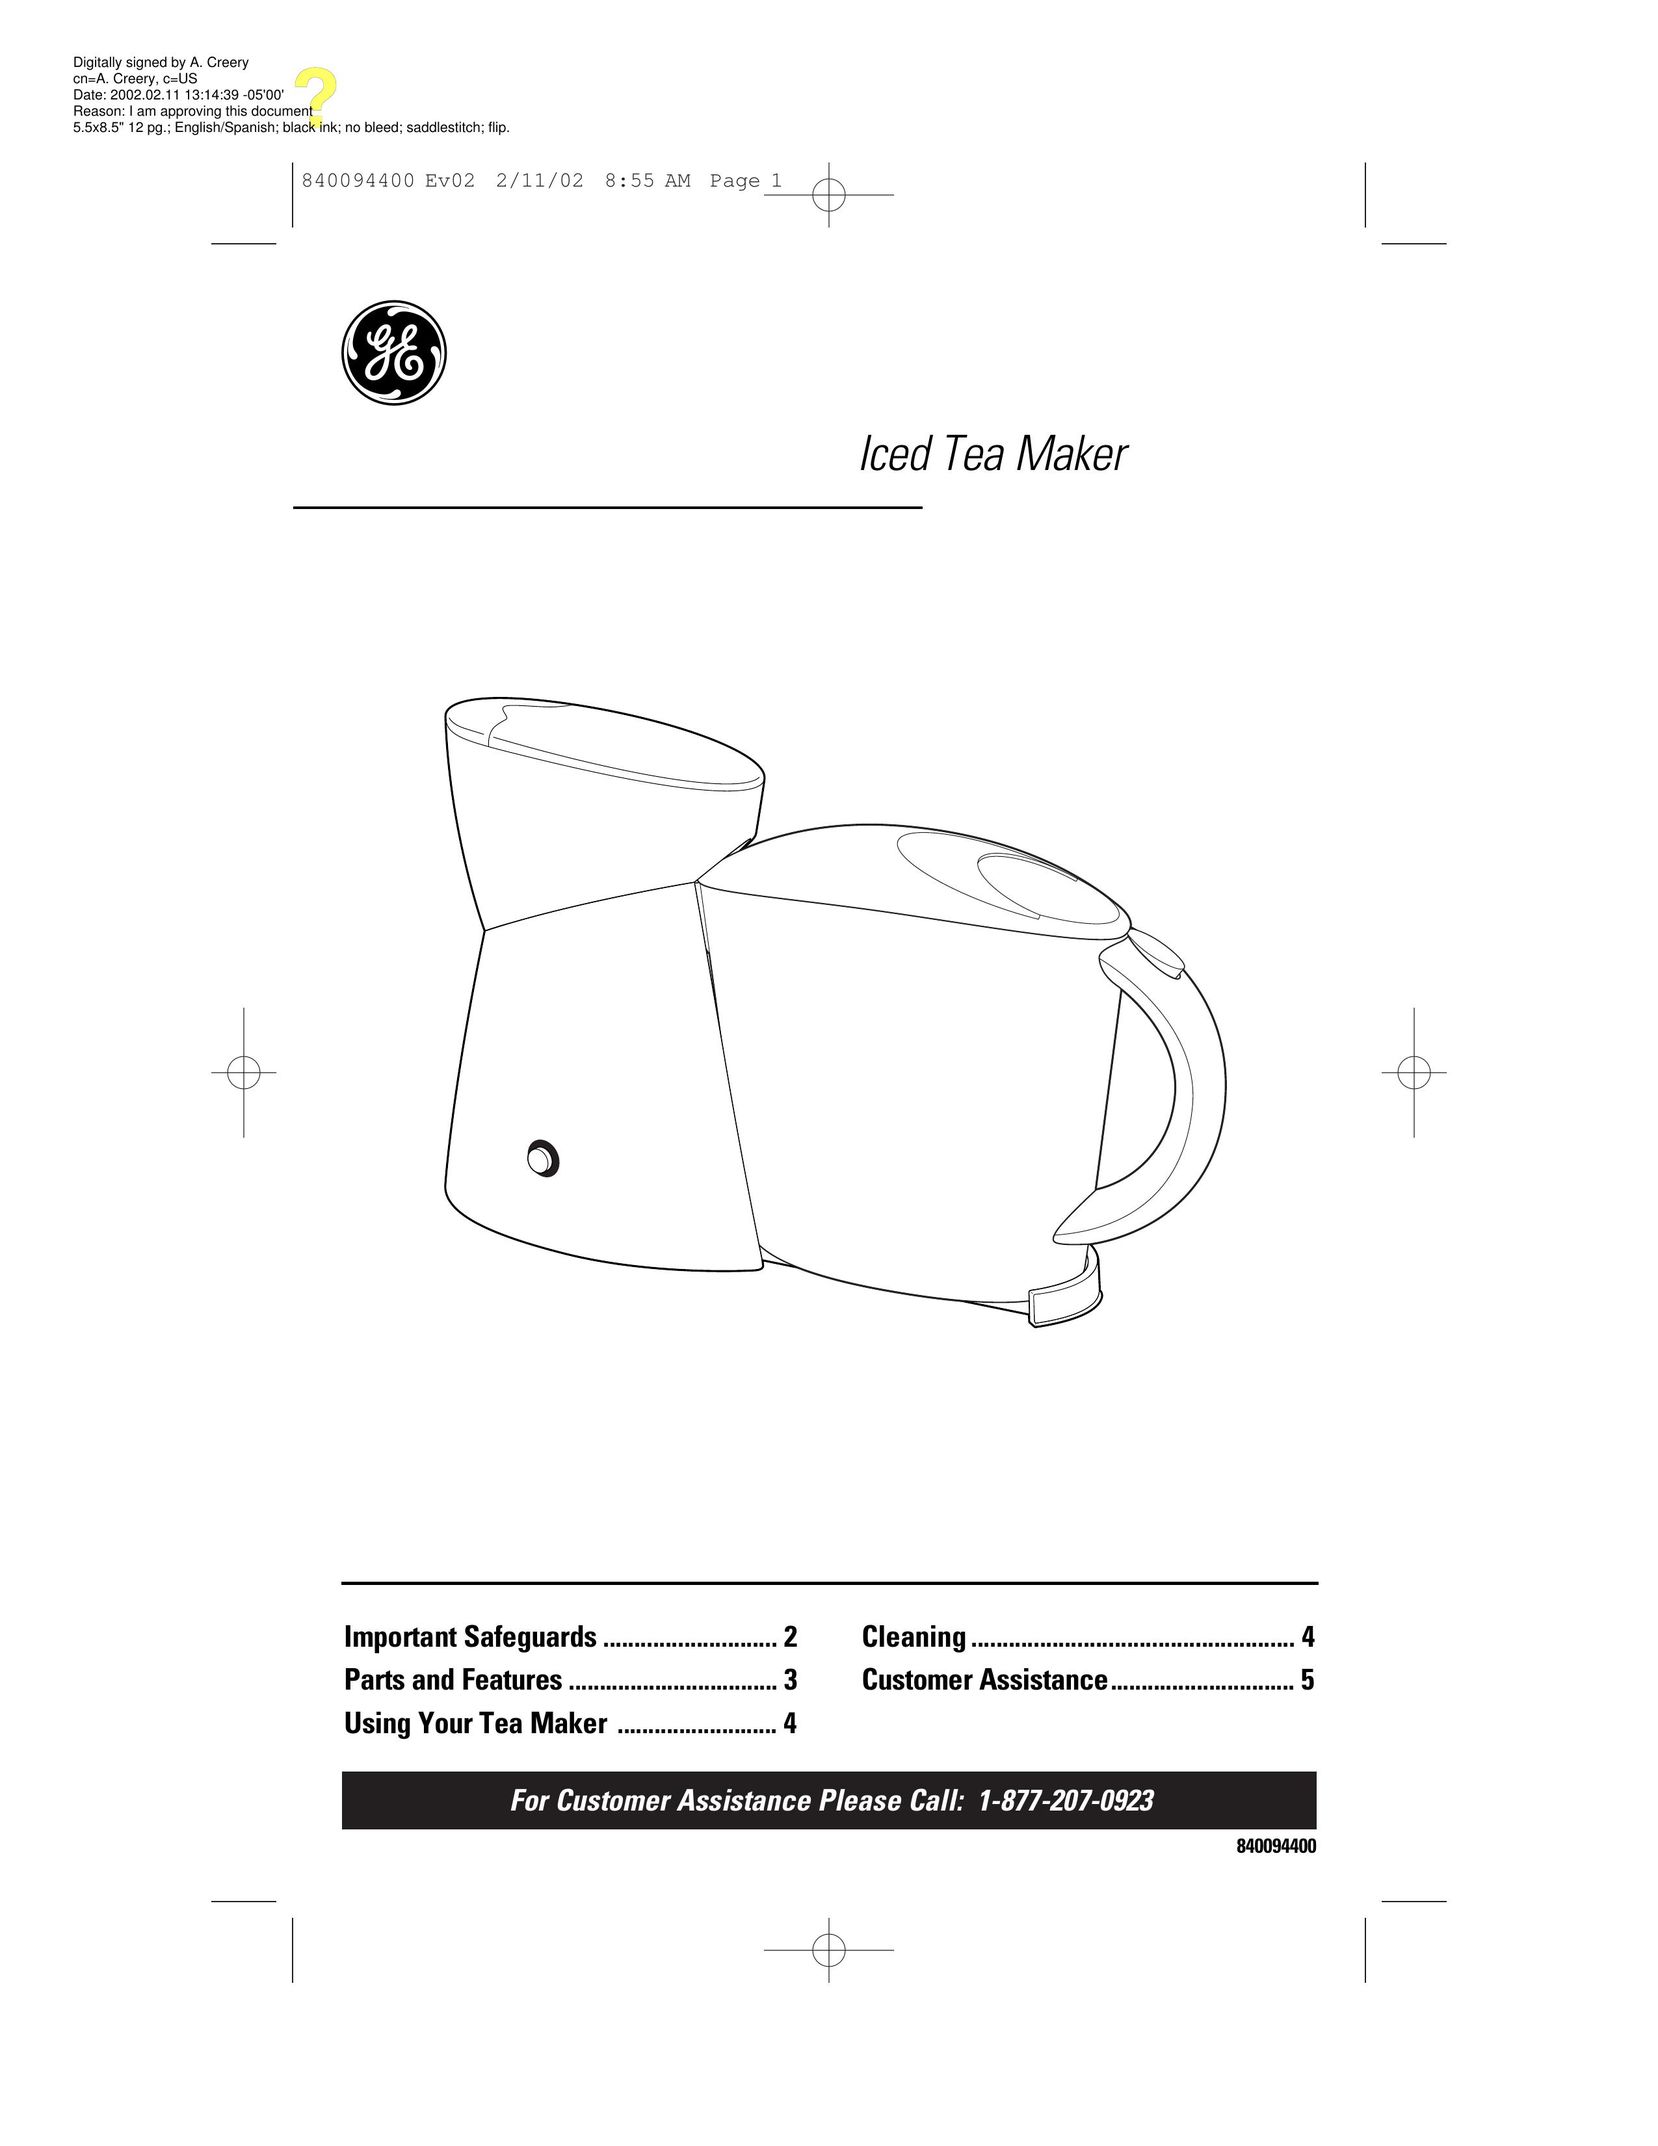 GE 106824 Ice Tea Maker User Manual